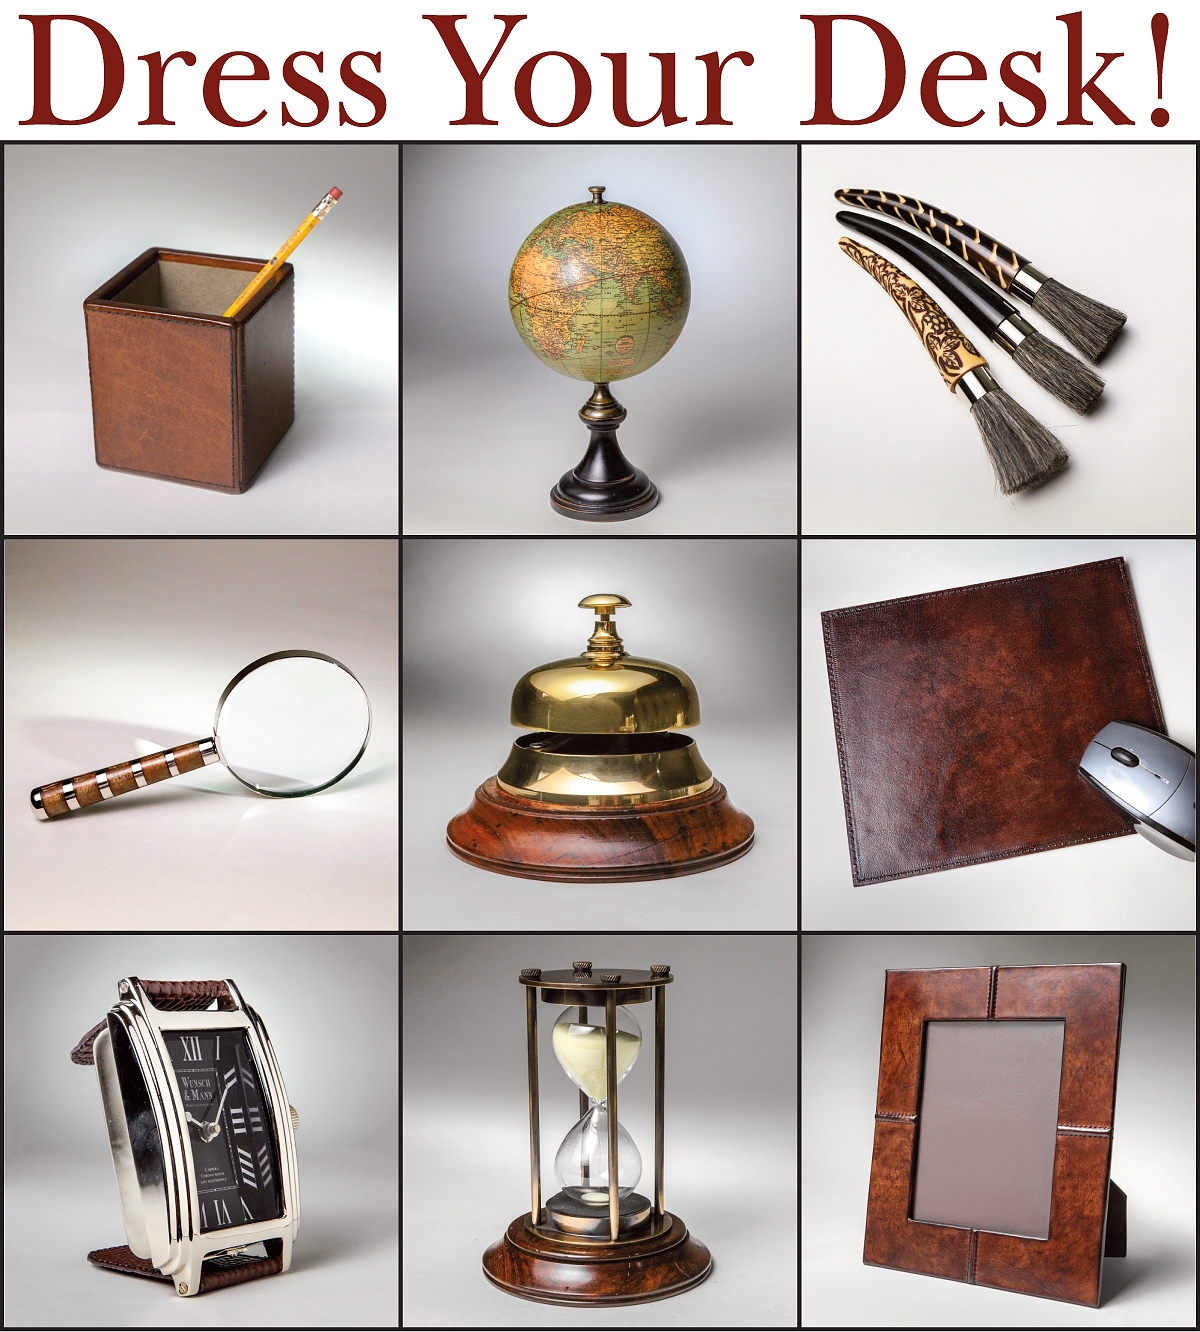 Dress Your Desk at LindaHorn.com